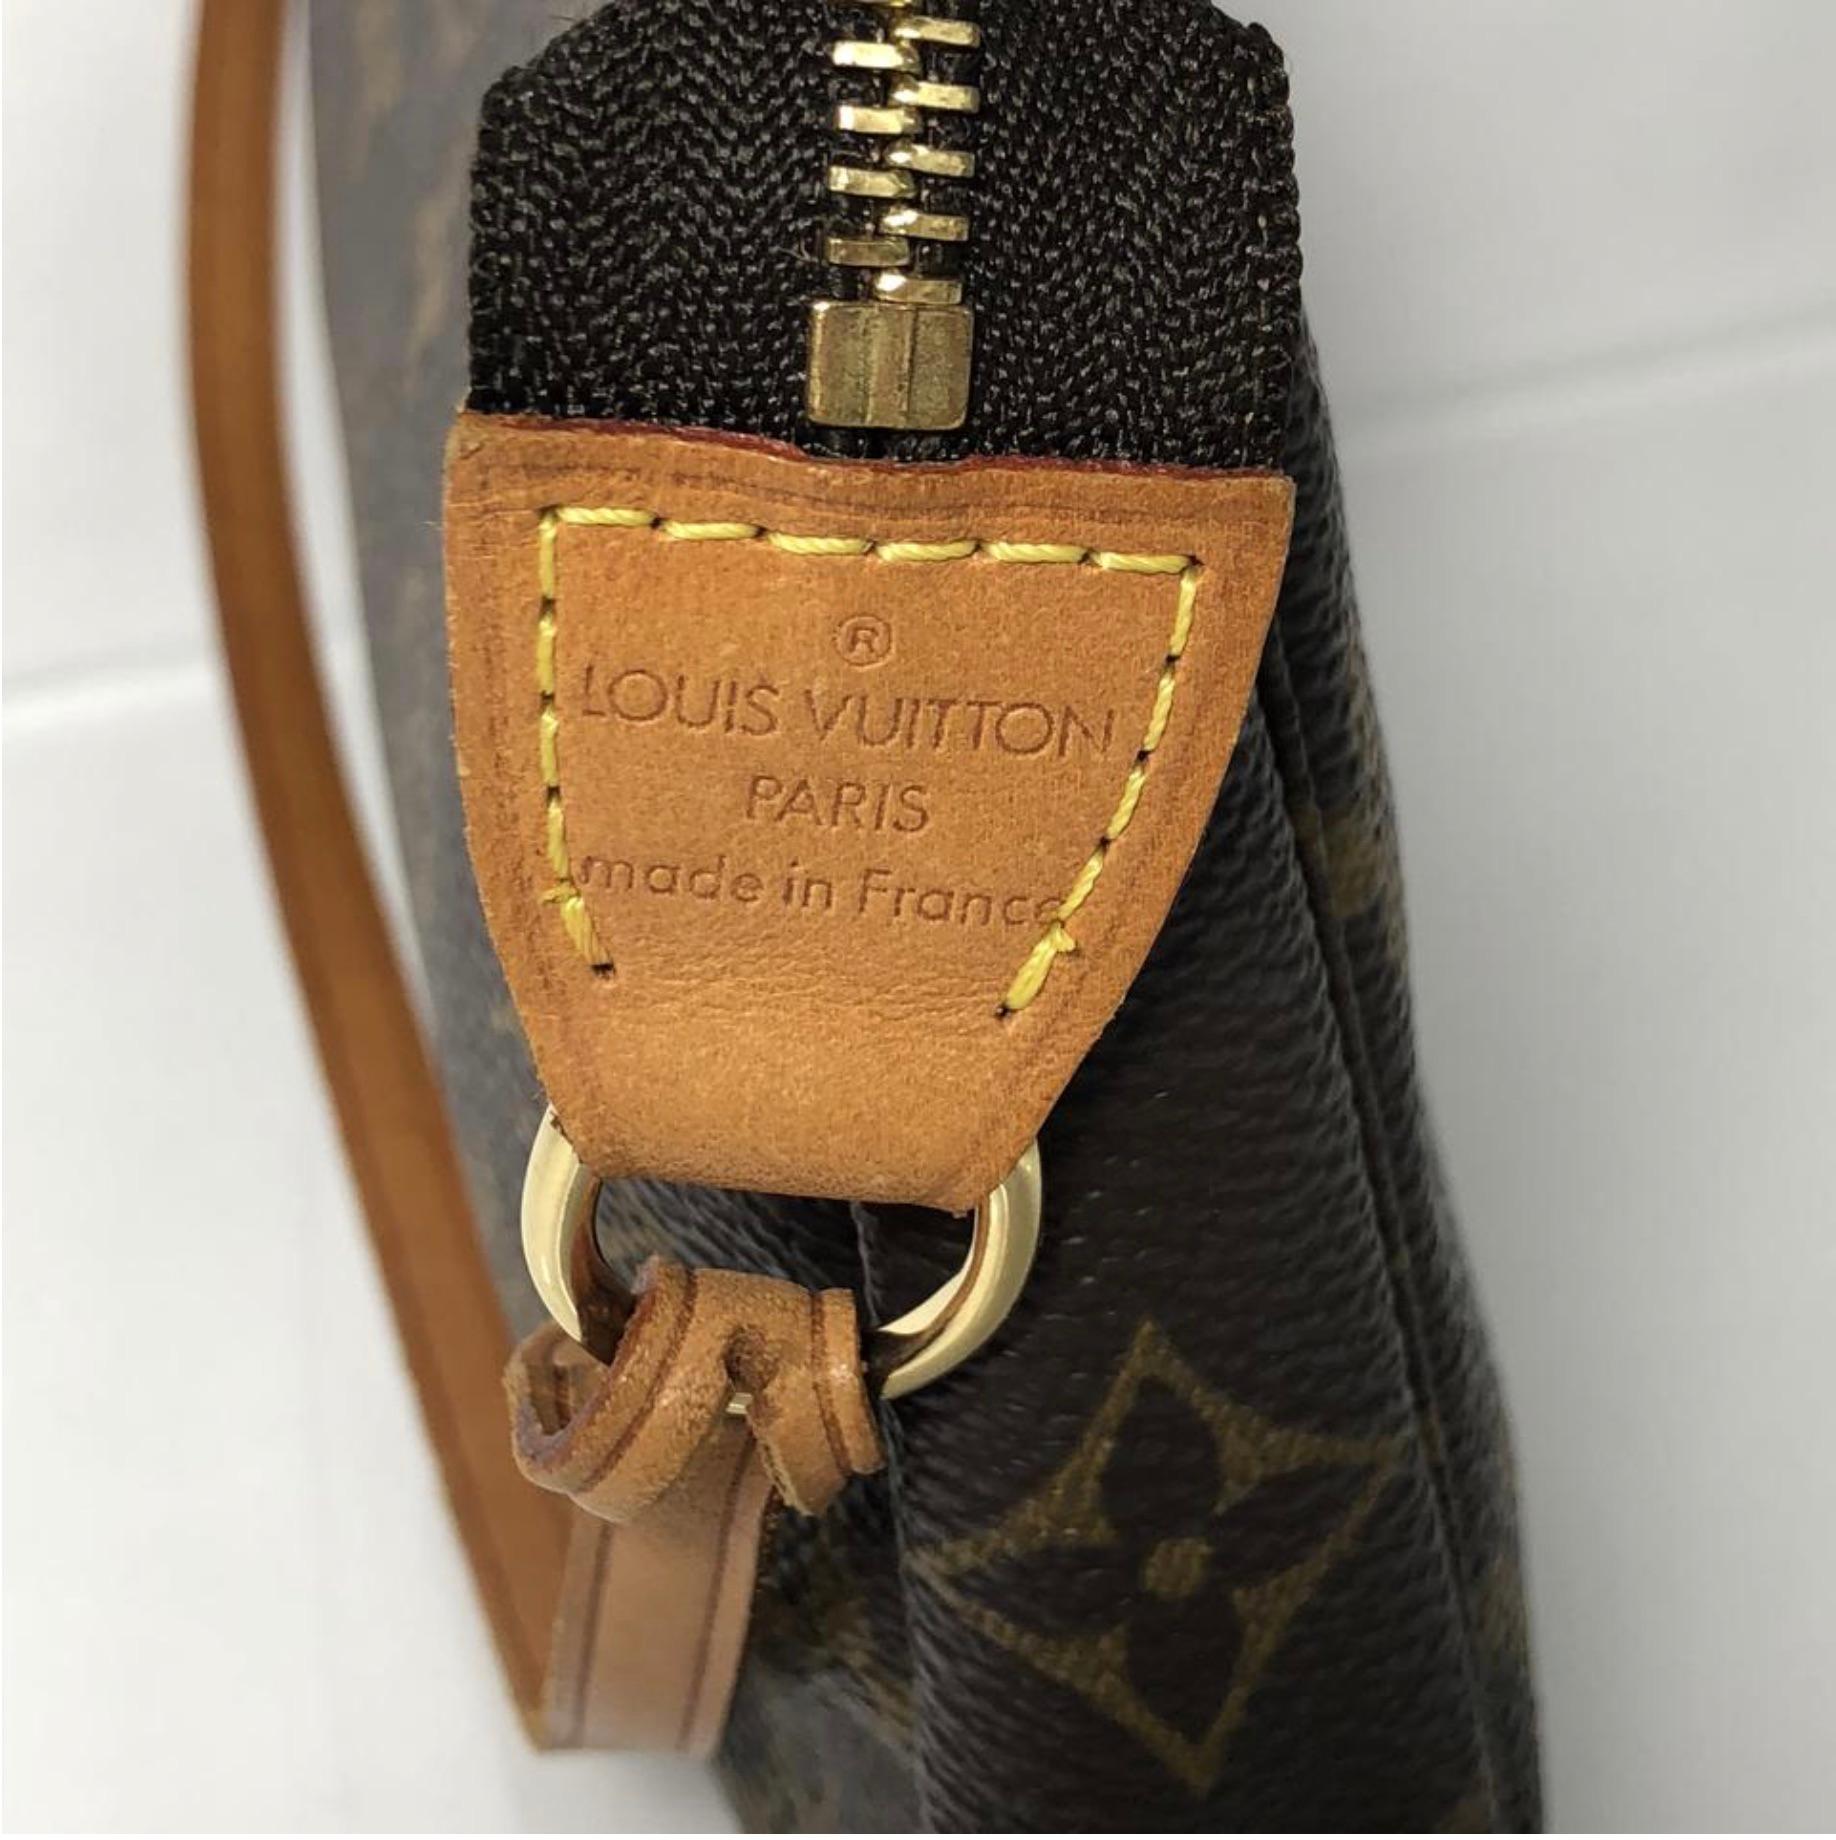  Louis Vuitton Monogram Pochette Accessories Wristlet Handbag In Good Condition For Sale In Saint Charles, IL